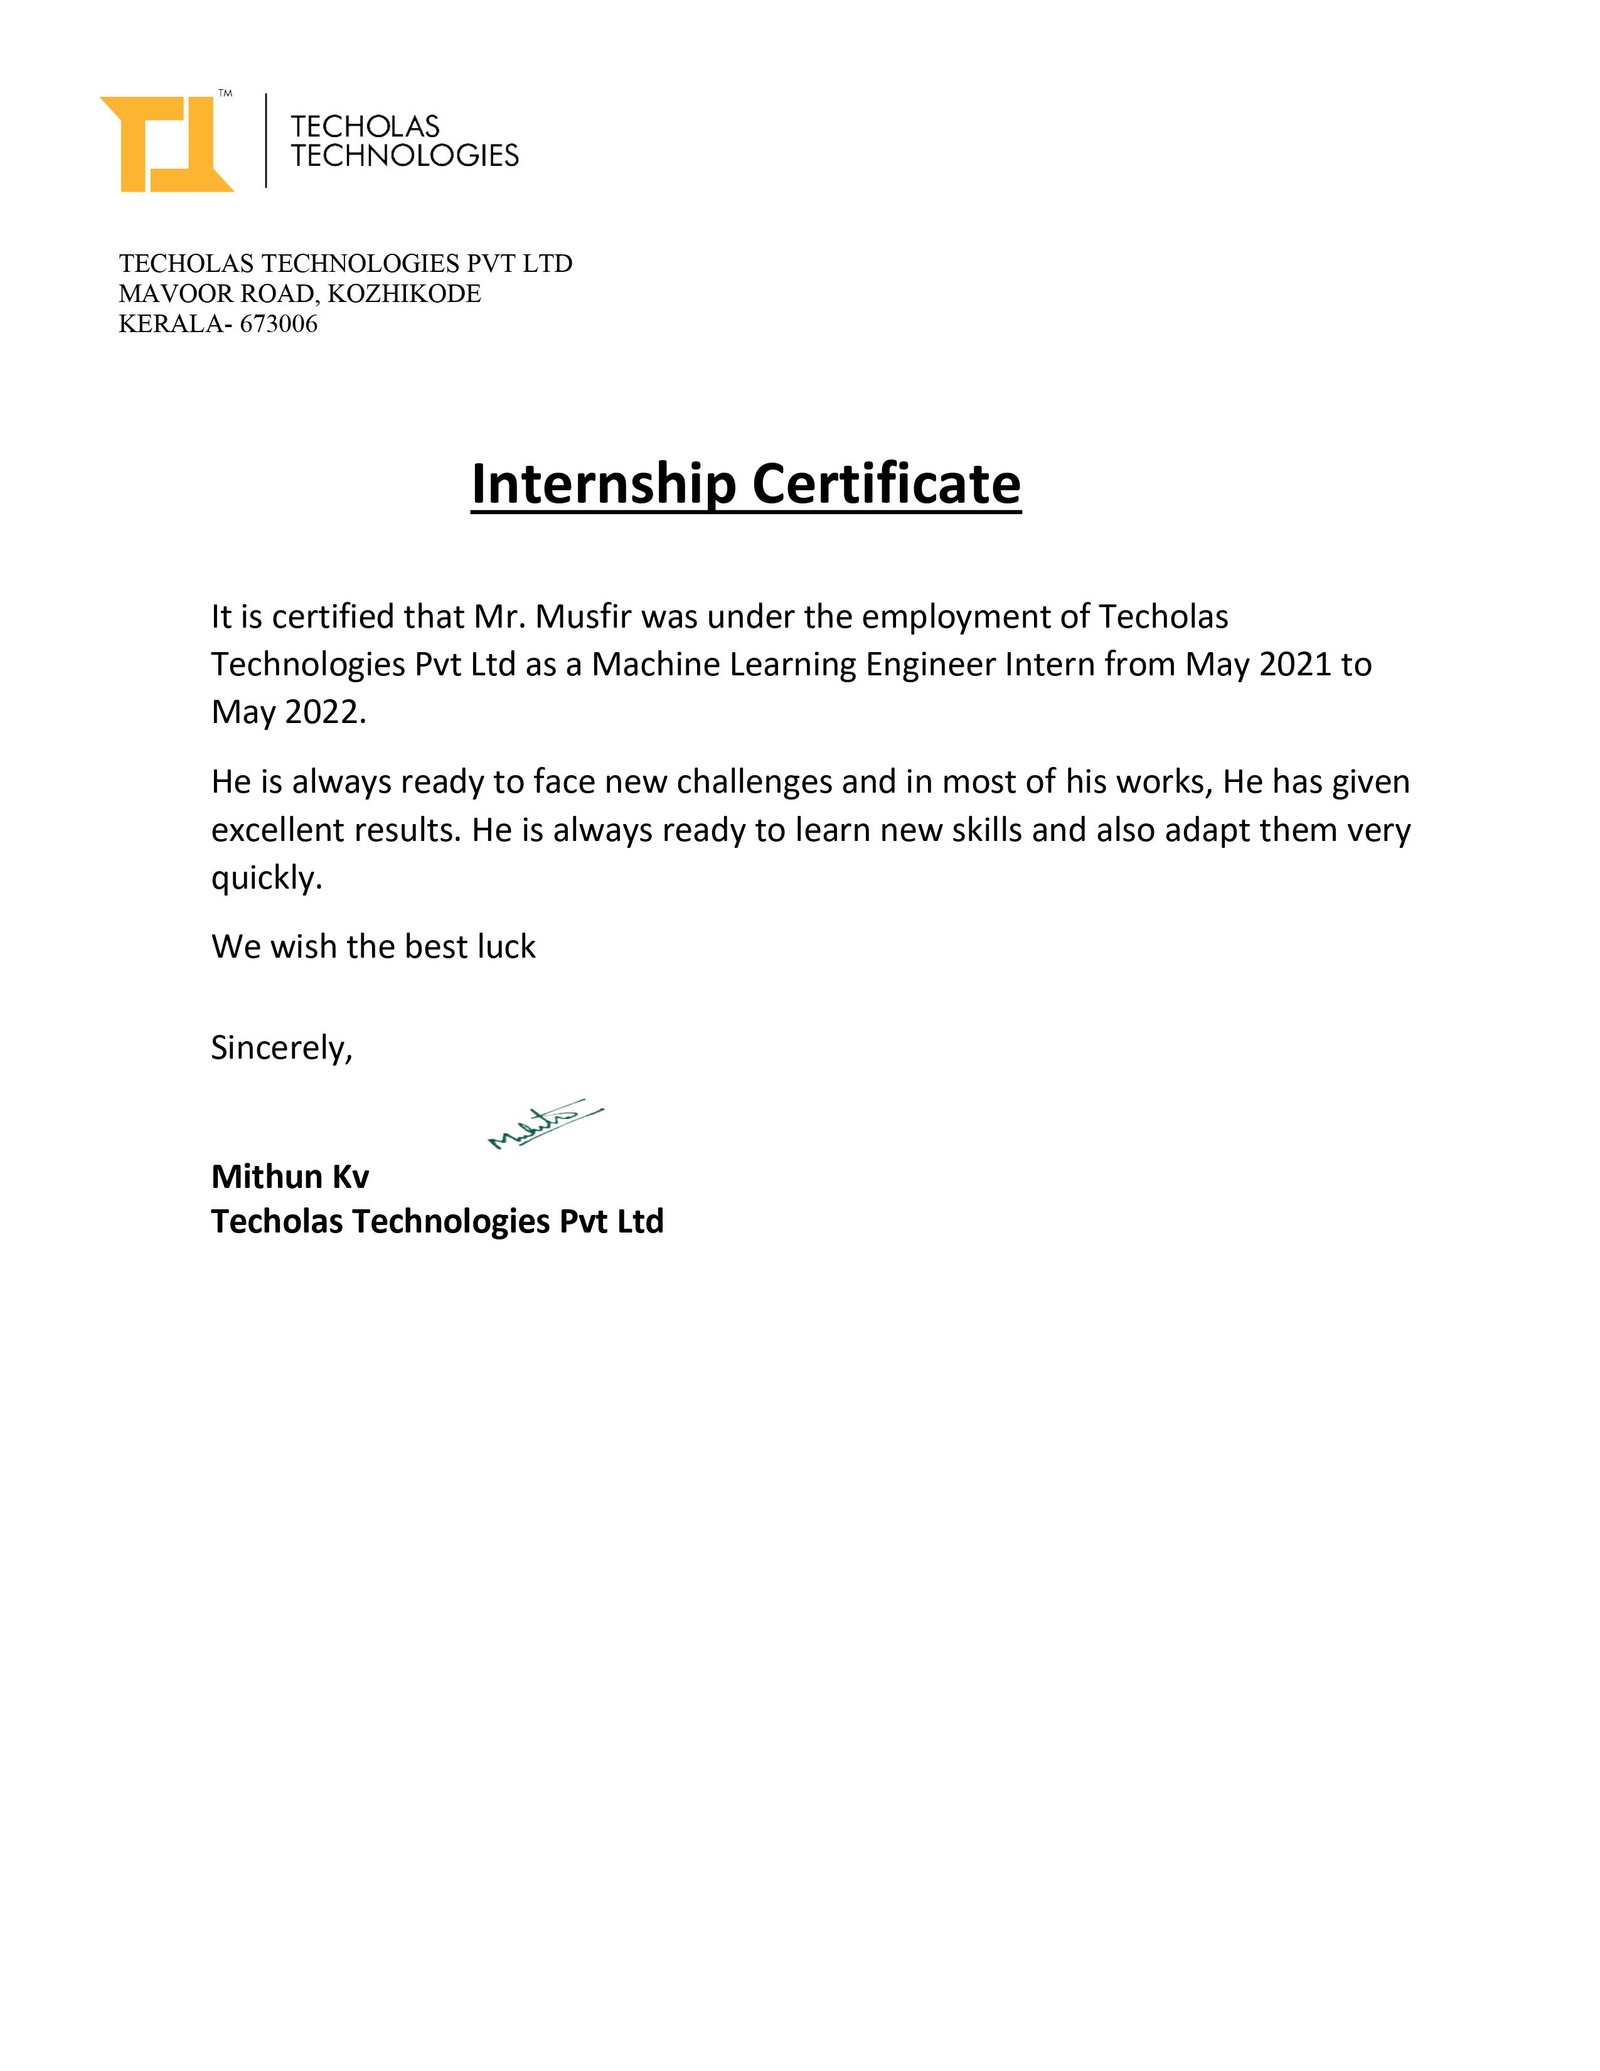 Data Analytics Internship Certification Courses in Kochi and Kozhikode